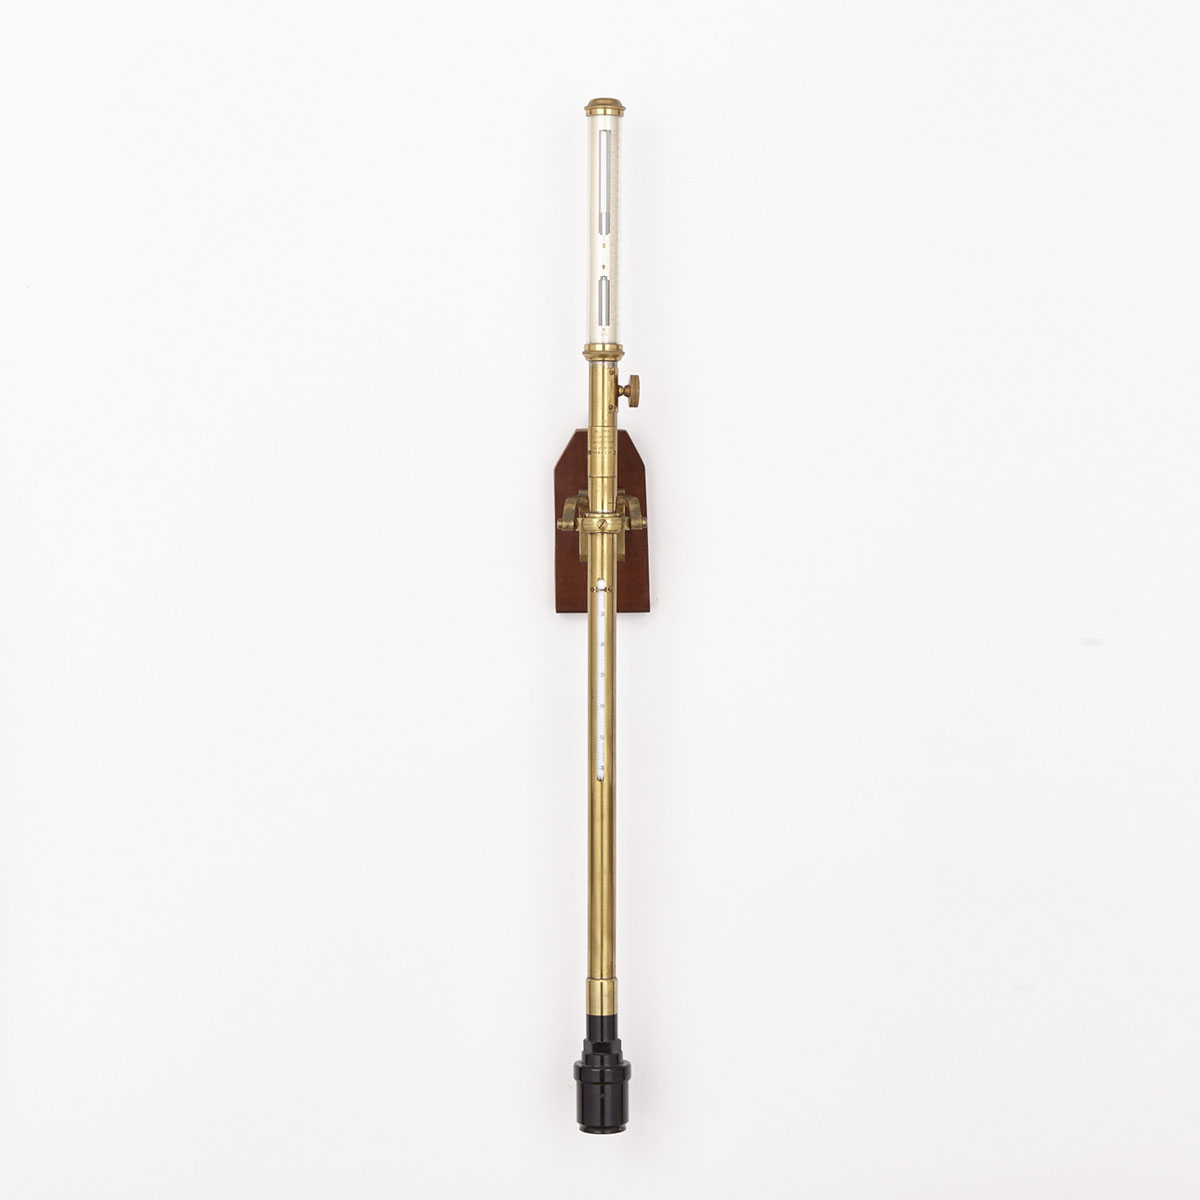 English Brass Marine Stick Barometer, James Joseph Hicks, London, 19th century